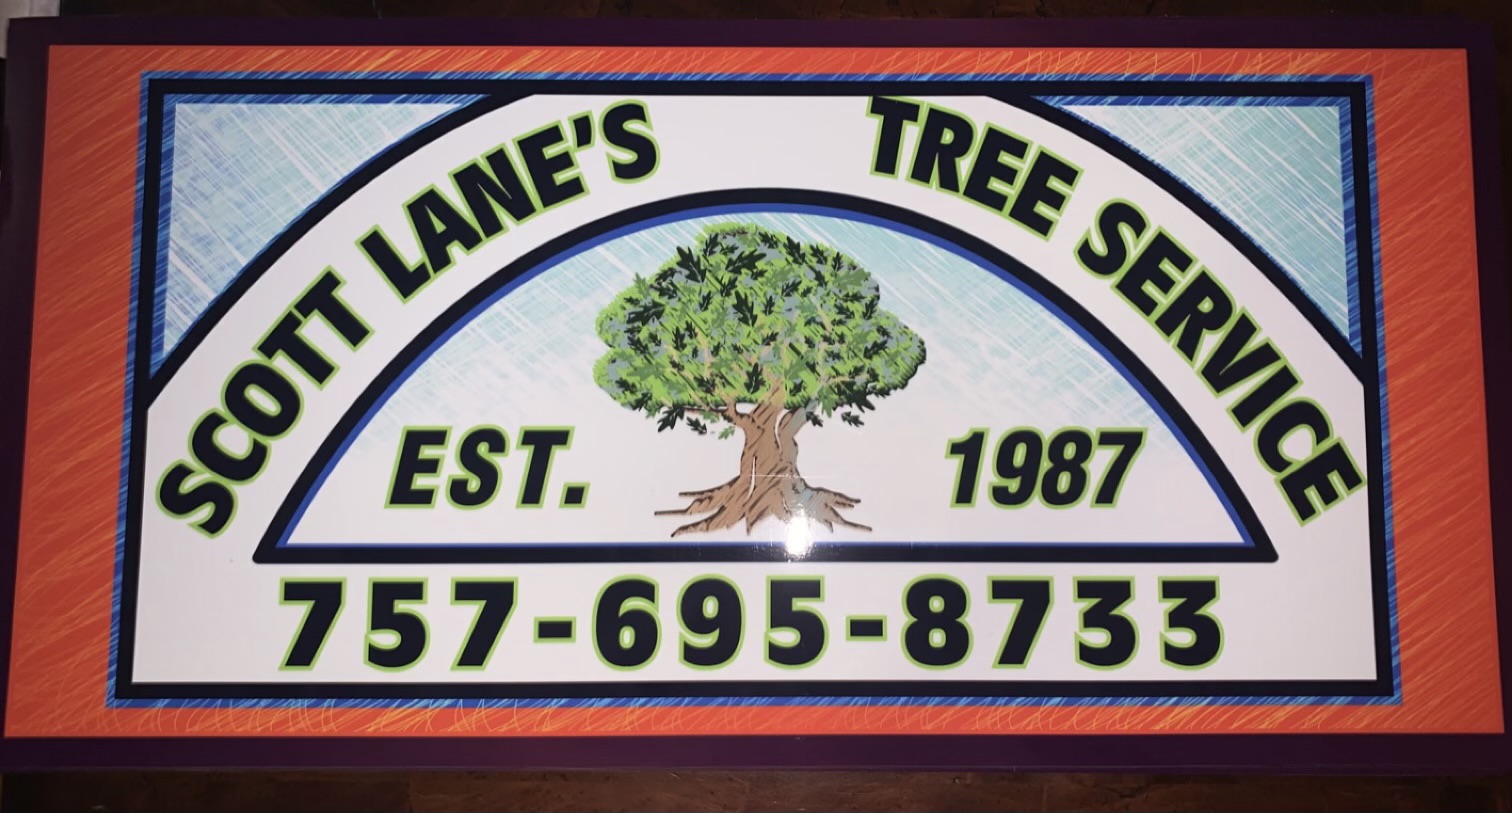 Scott Lanes Tree Service Logo